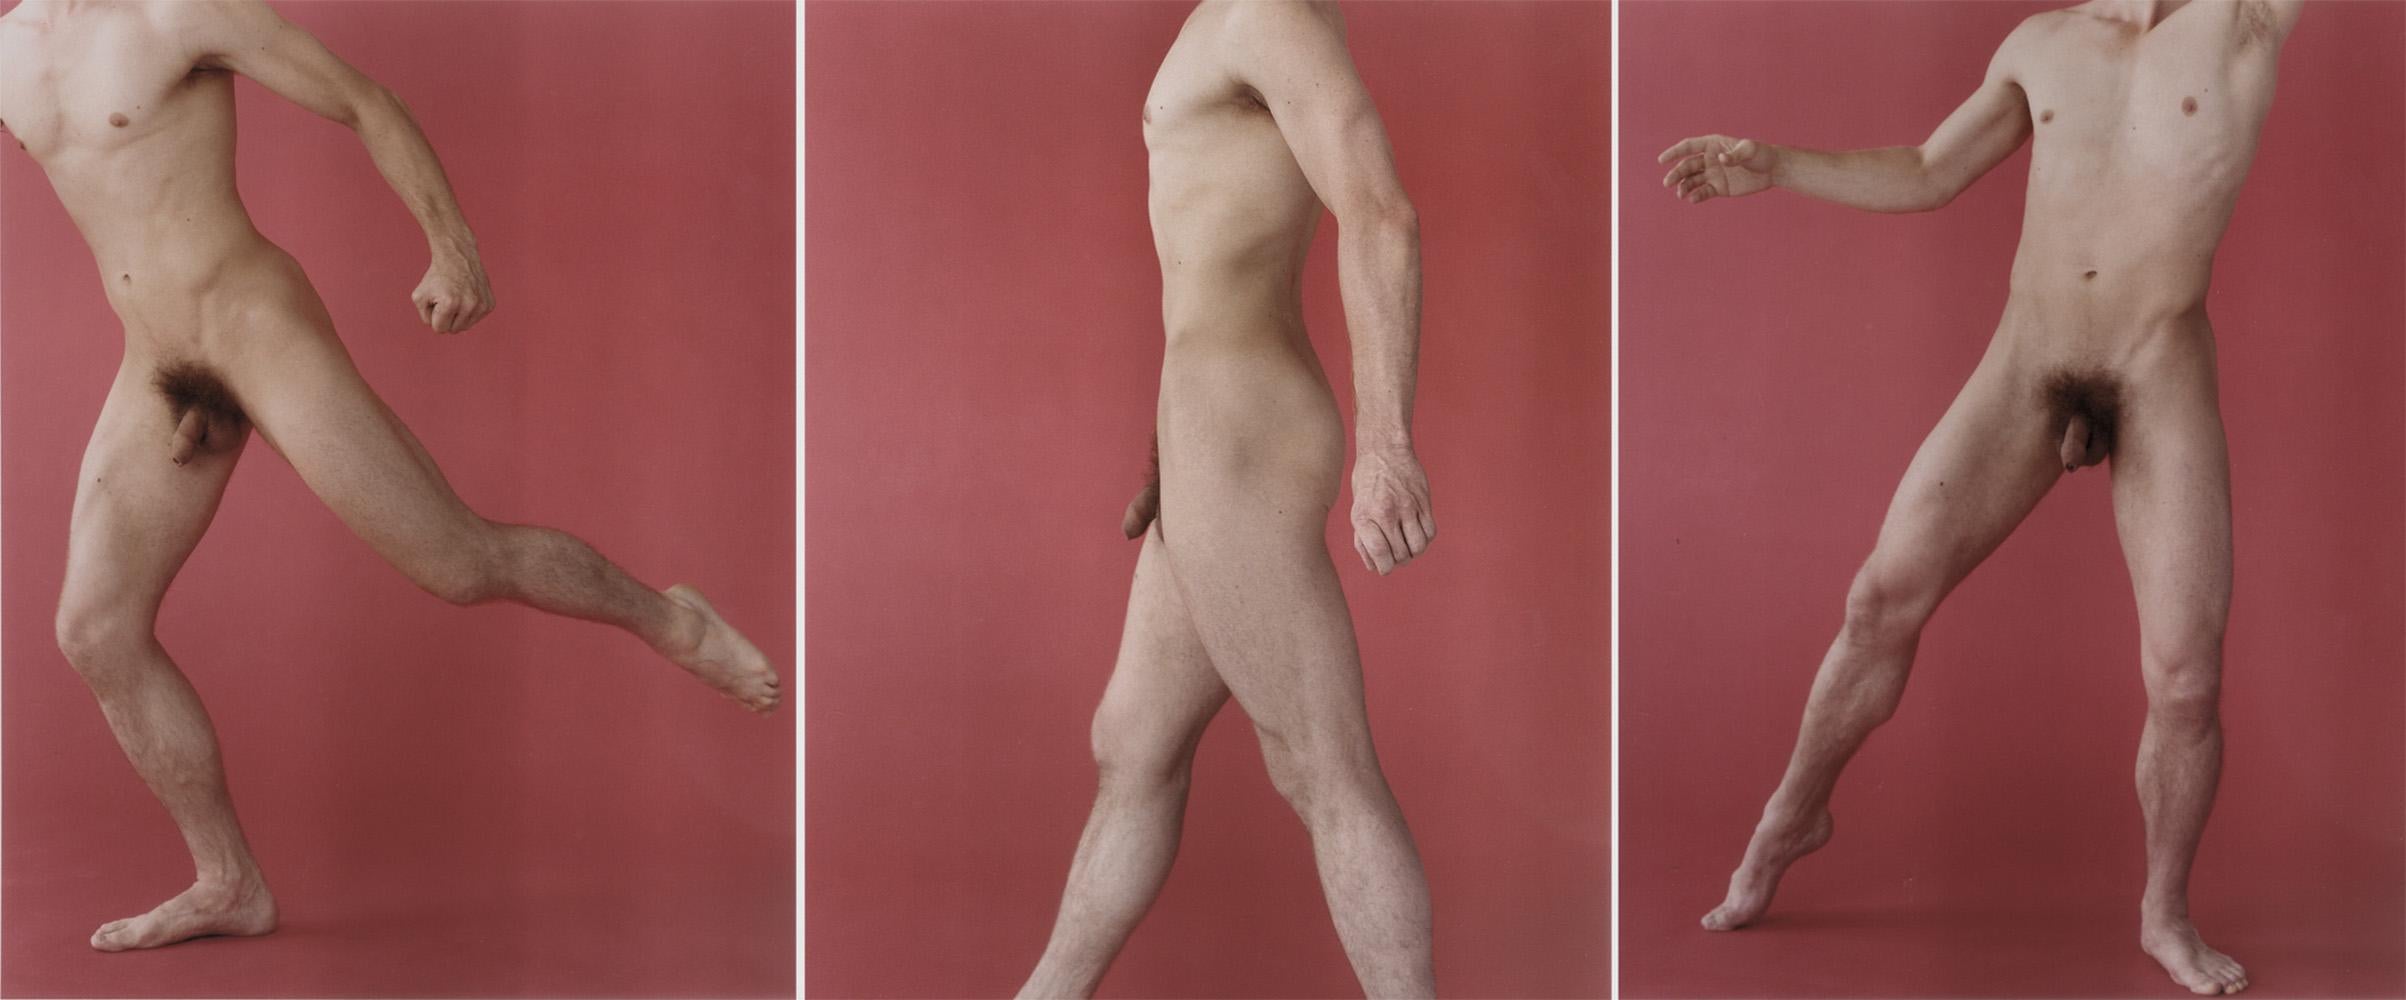 Michael James O’Brien Figurative Photograph - Kouros Triptych 01. Nude Photograph Limited Edition 